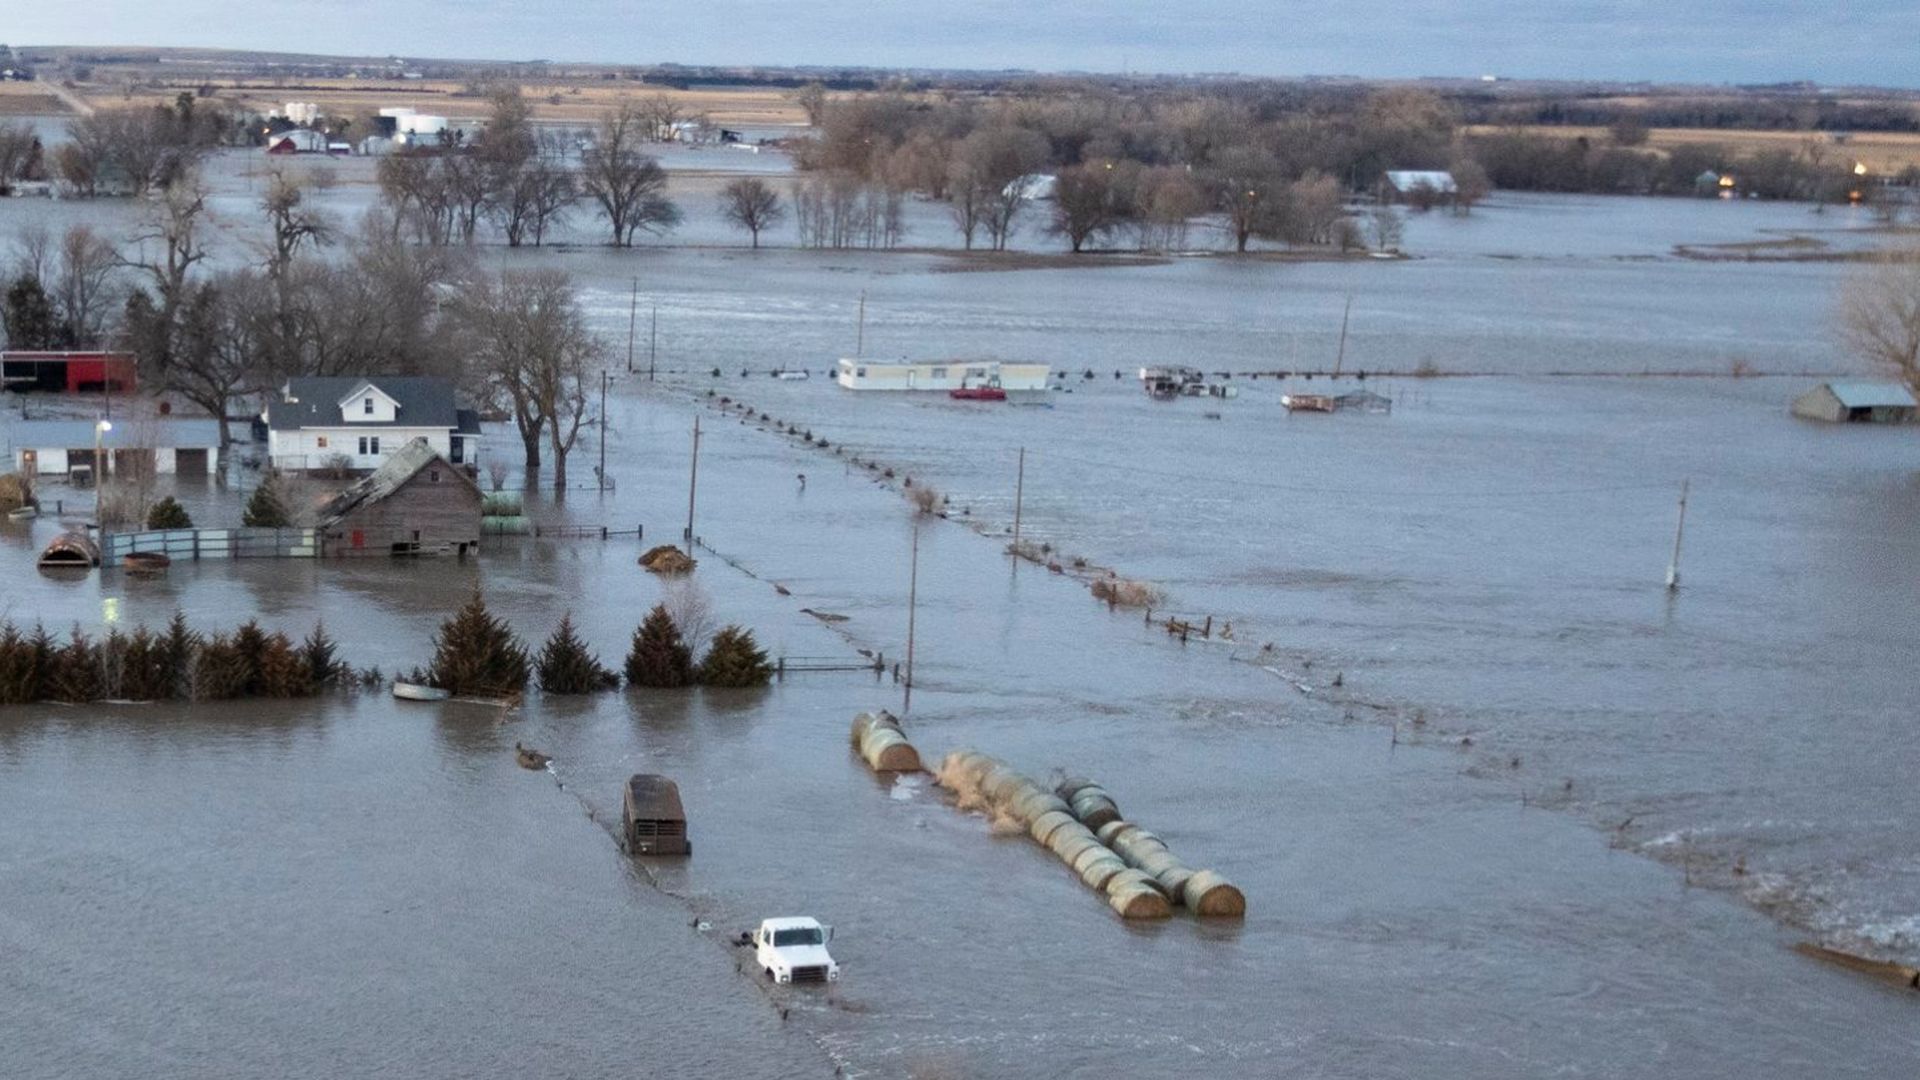 This Nebraska National Guard photo shows the devastating impact of the flooding.